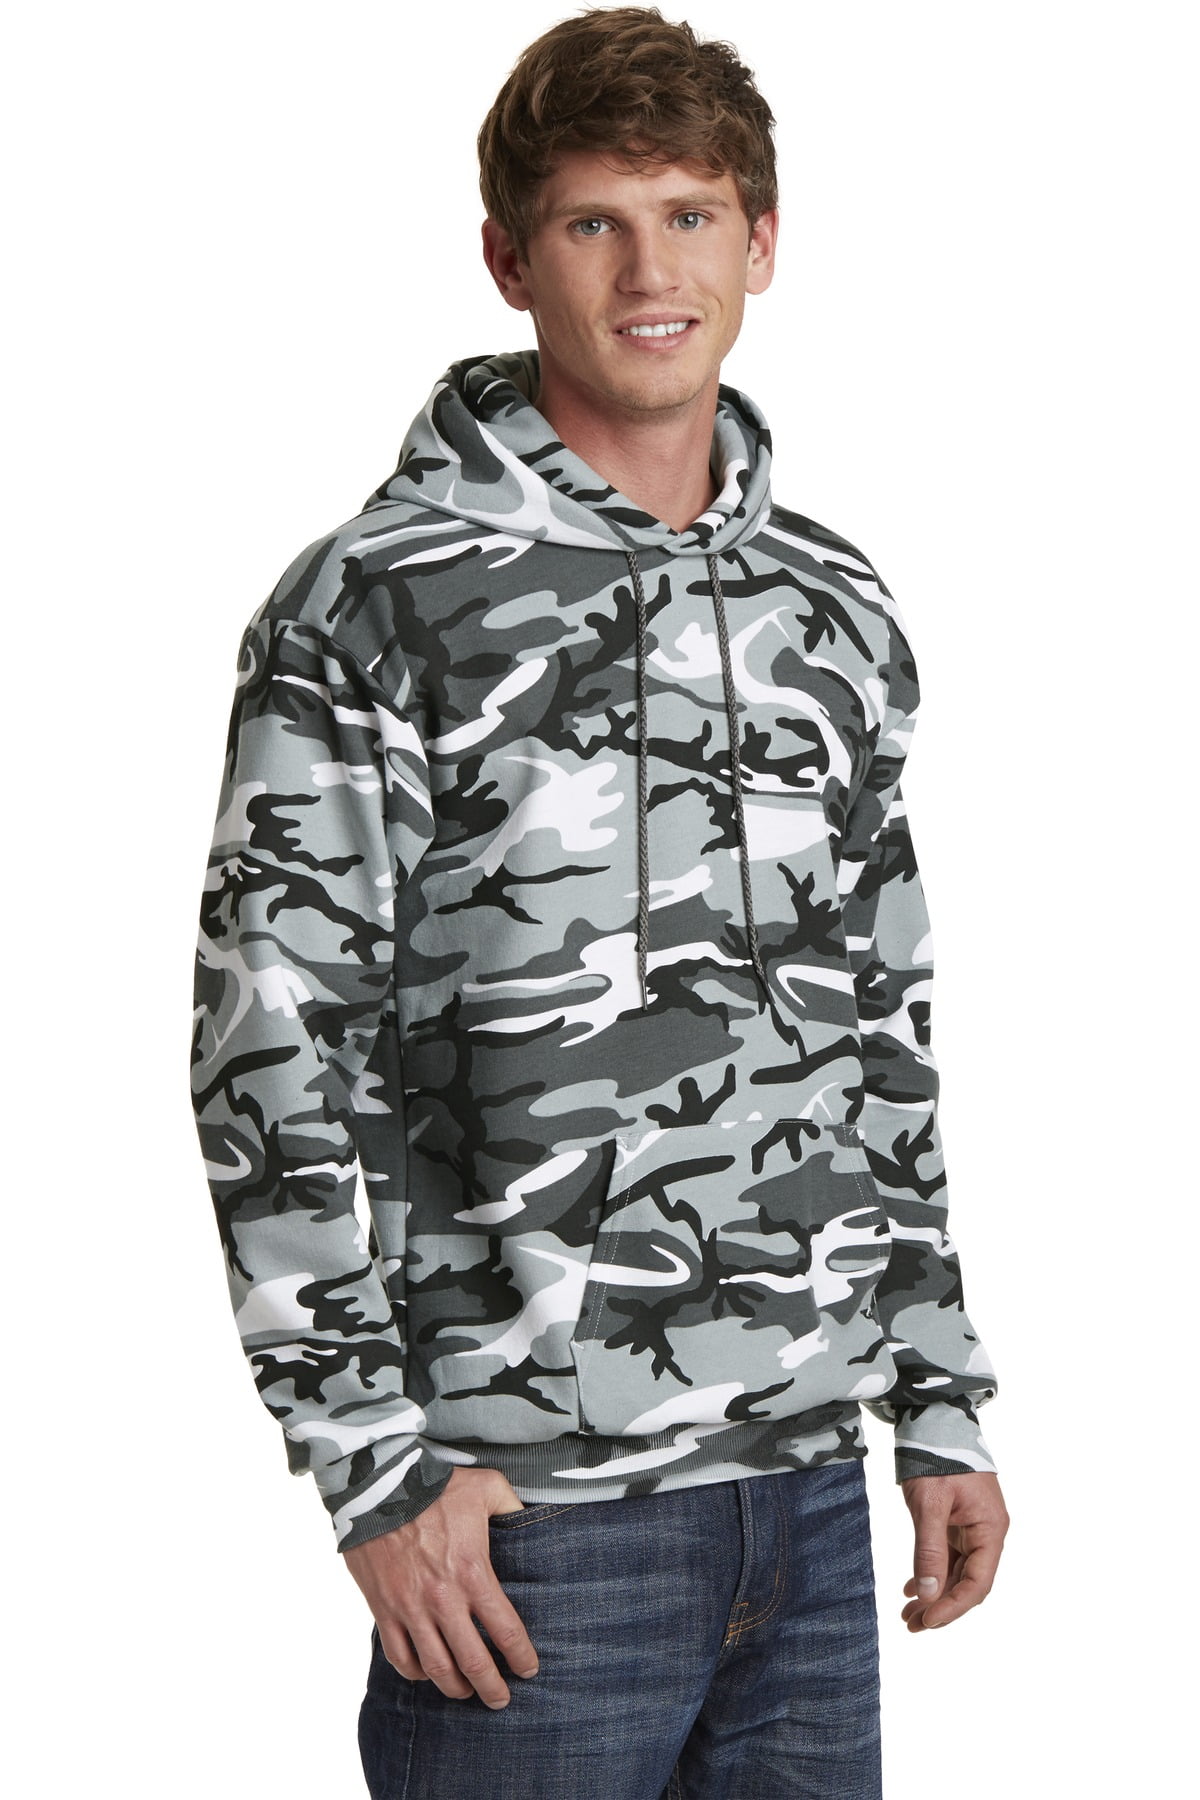 & Camo) Sweatshirt-S Core Hooded (Desert Port Company Camo Fleece Pullover